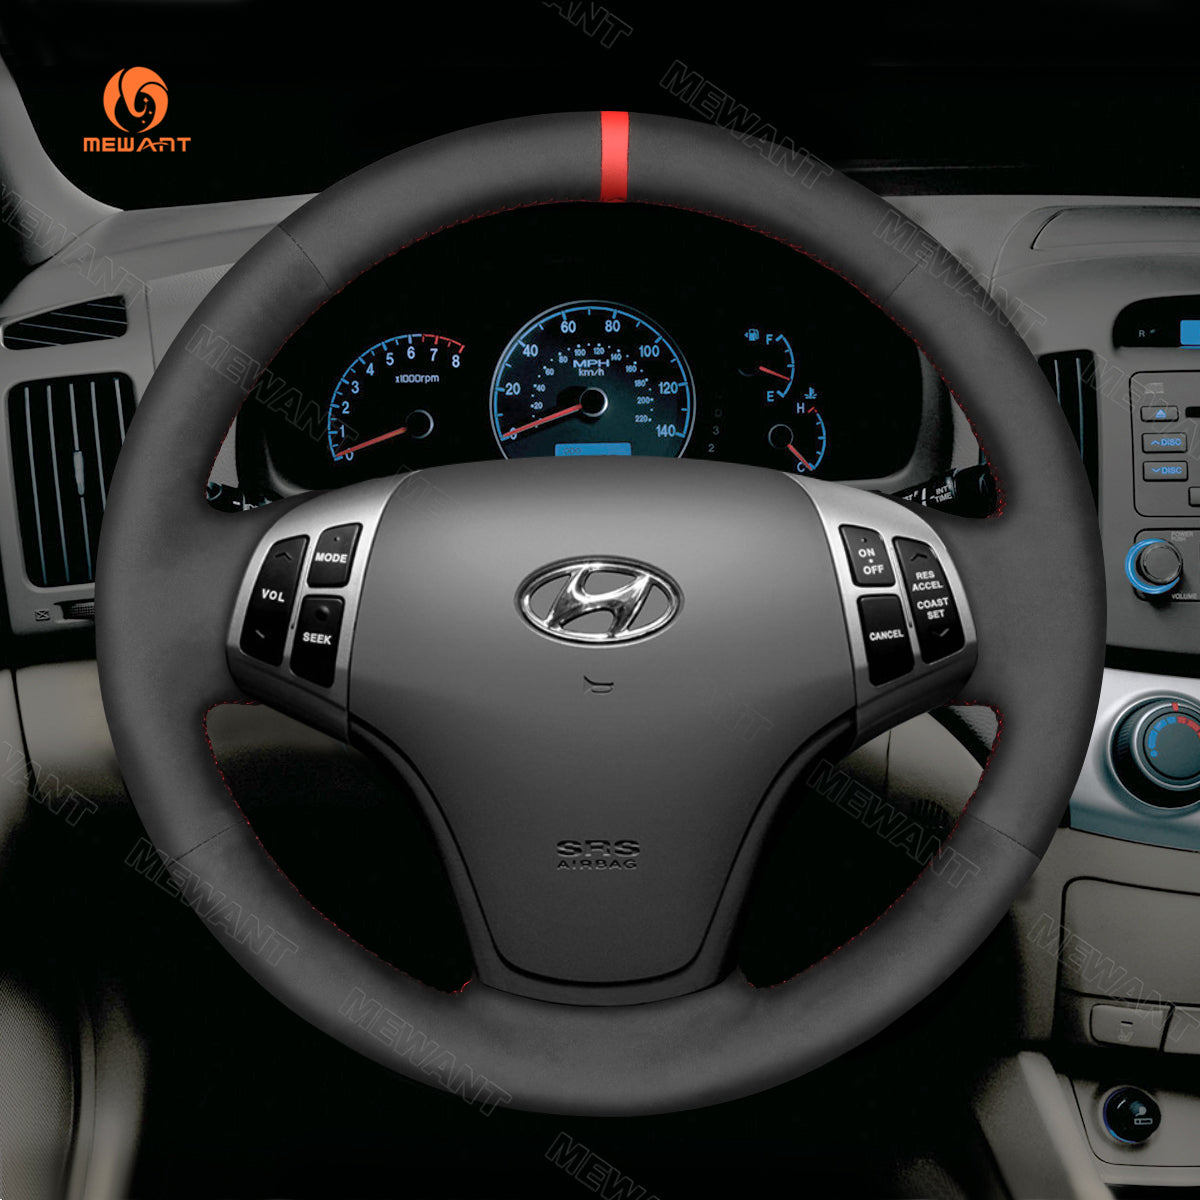 Car steering wheel cover for Hyundai Elantra 2007-2010